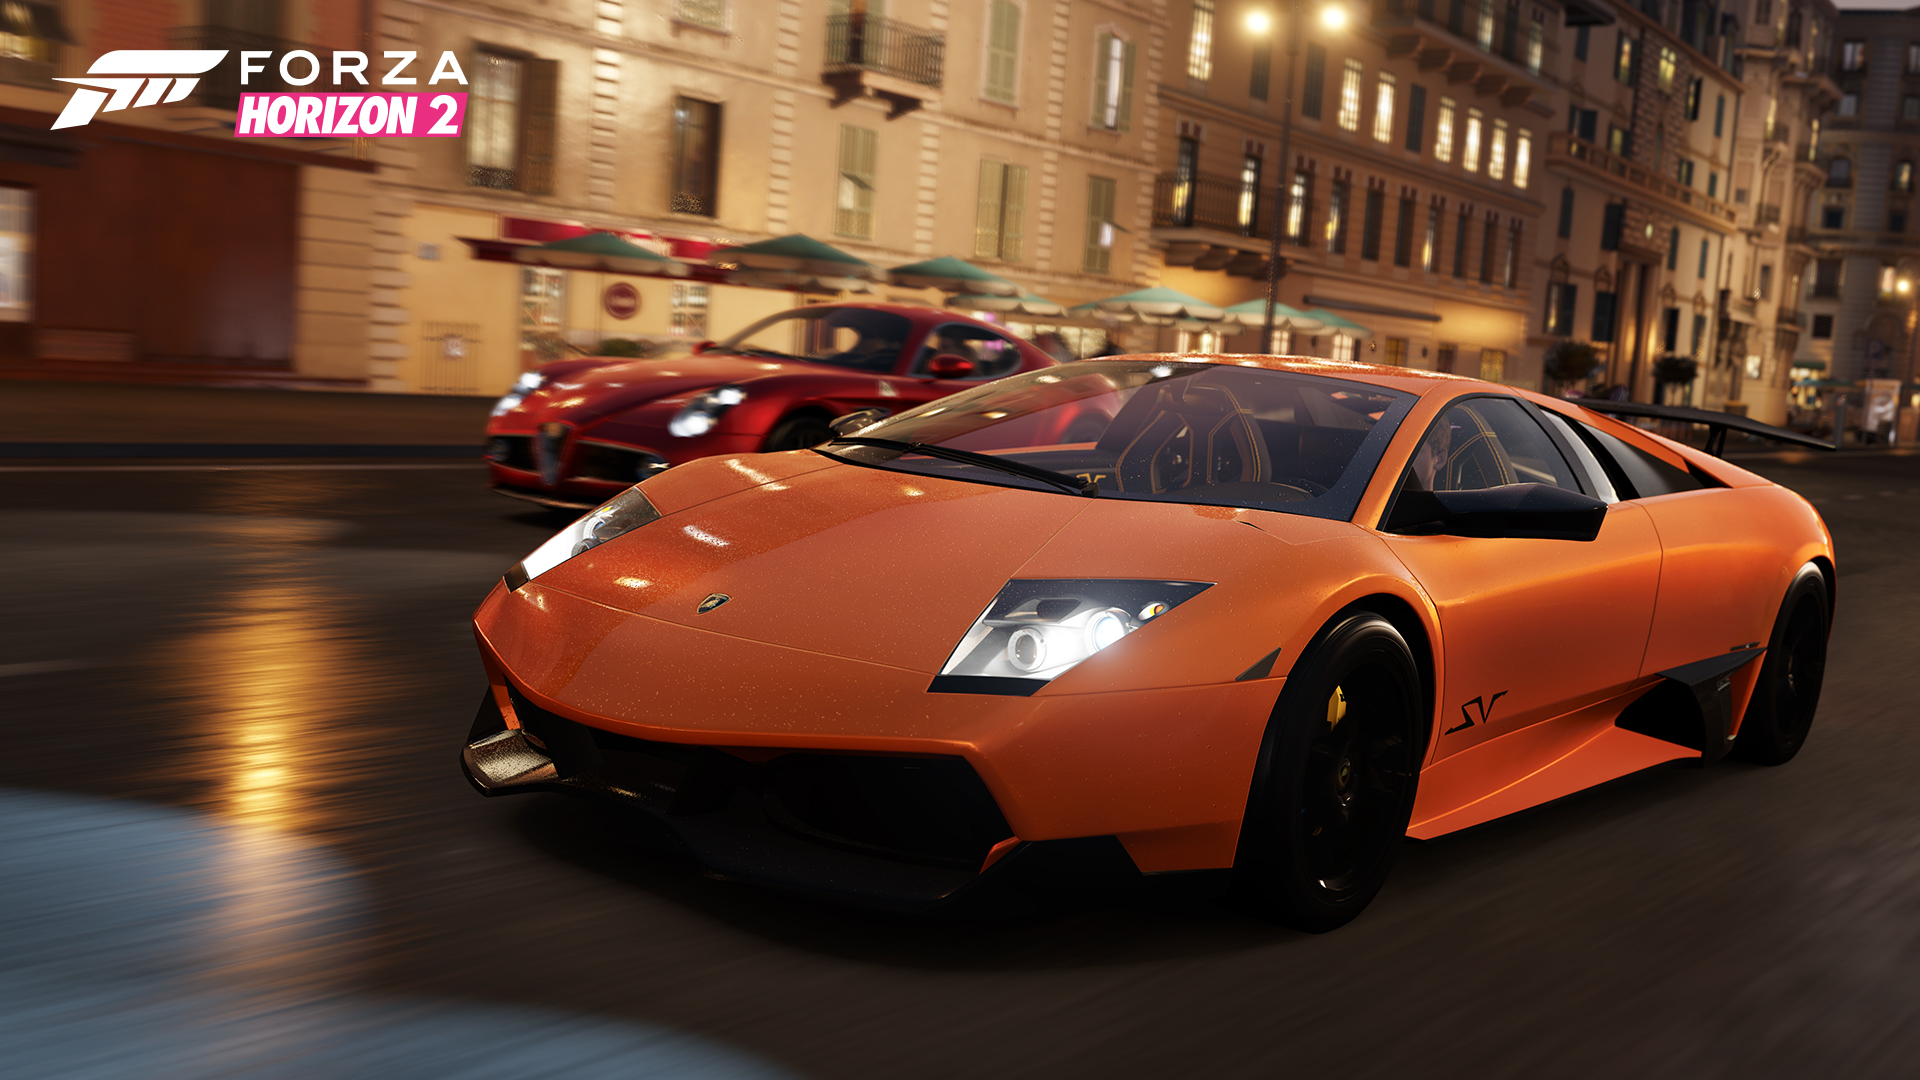 Forza Horizon 2 Presents Fast & Furious Midia Digital Xbox 360